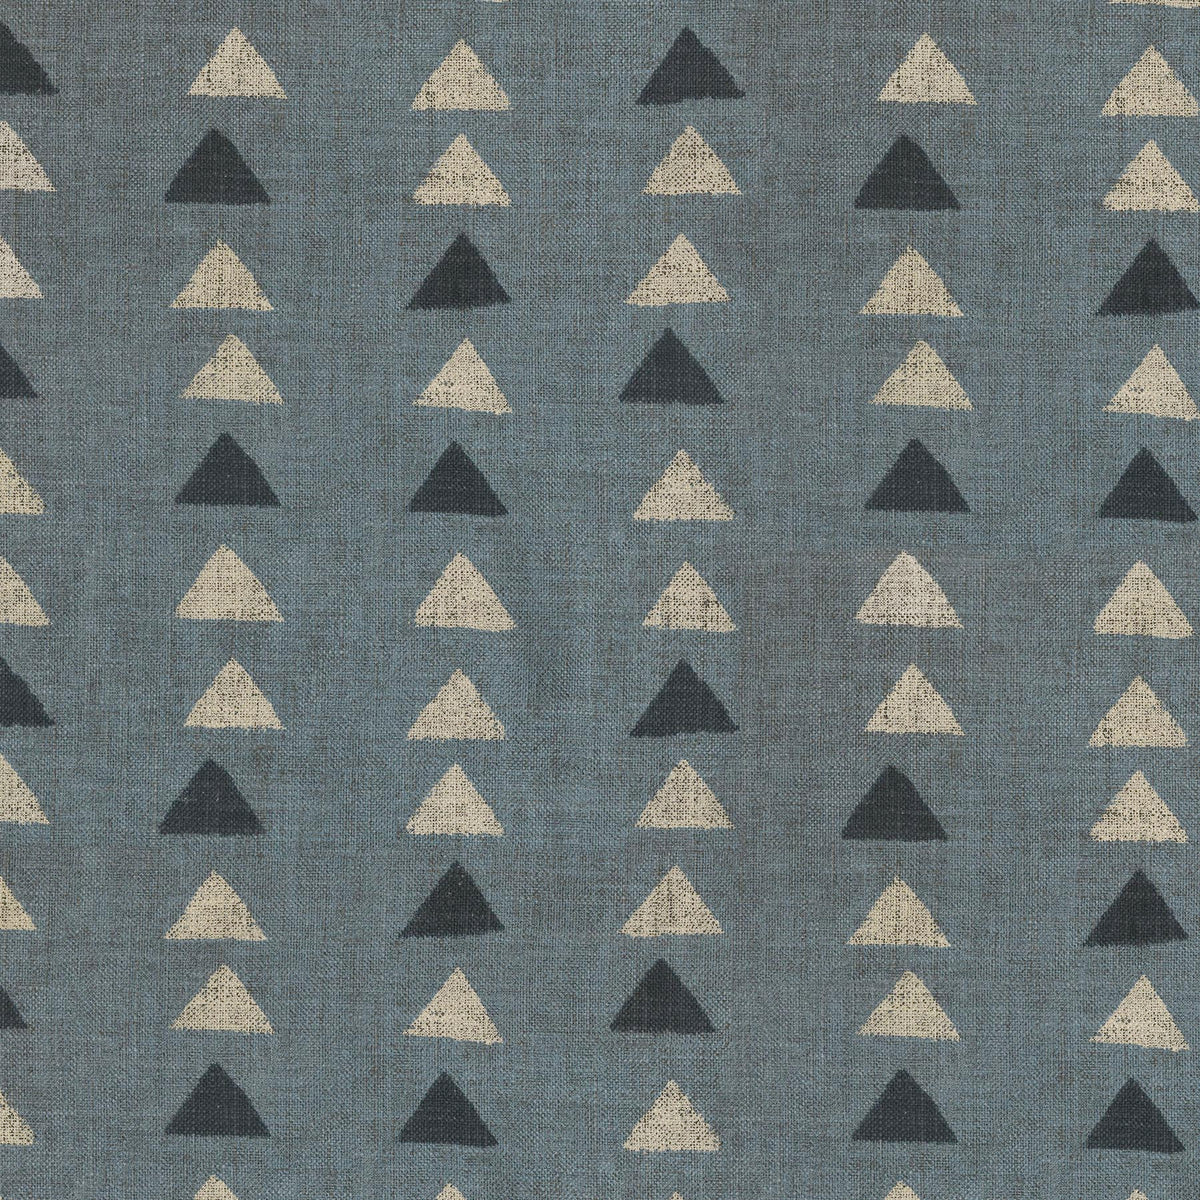 P/K Lifestyles Nomadic Triangle - Blue Smoke 408455 Fabric Swatch